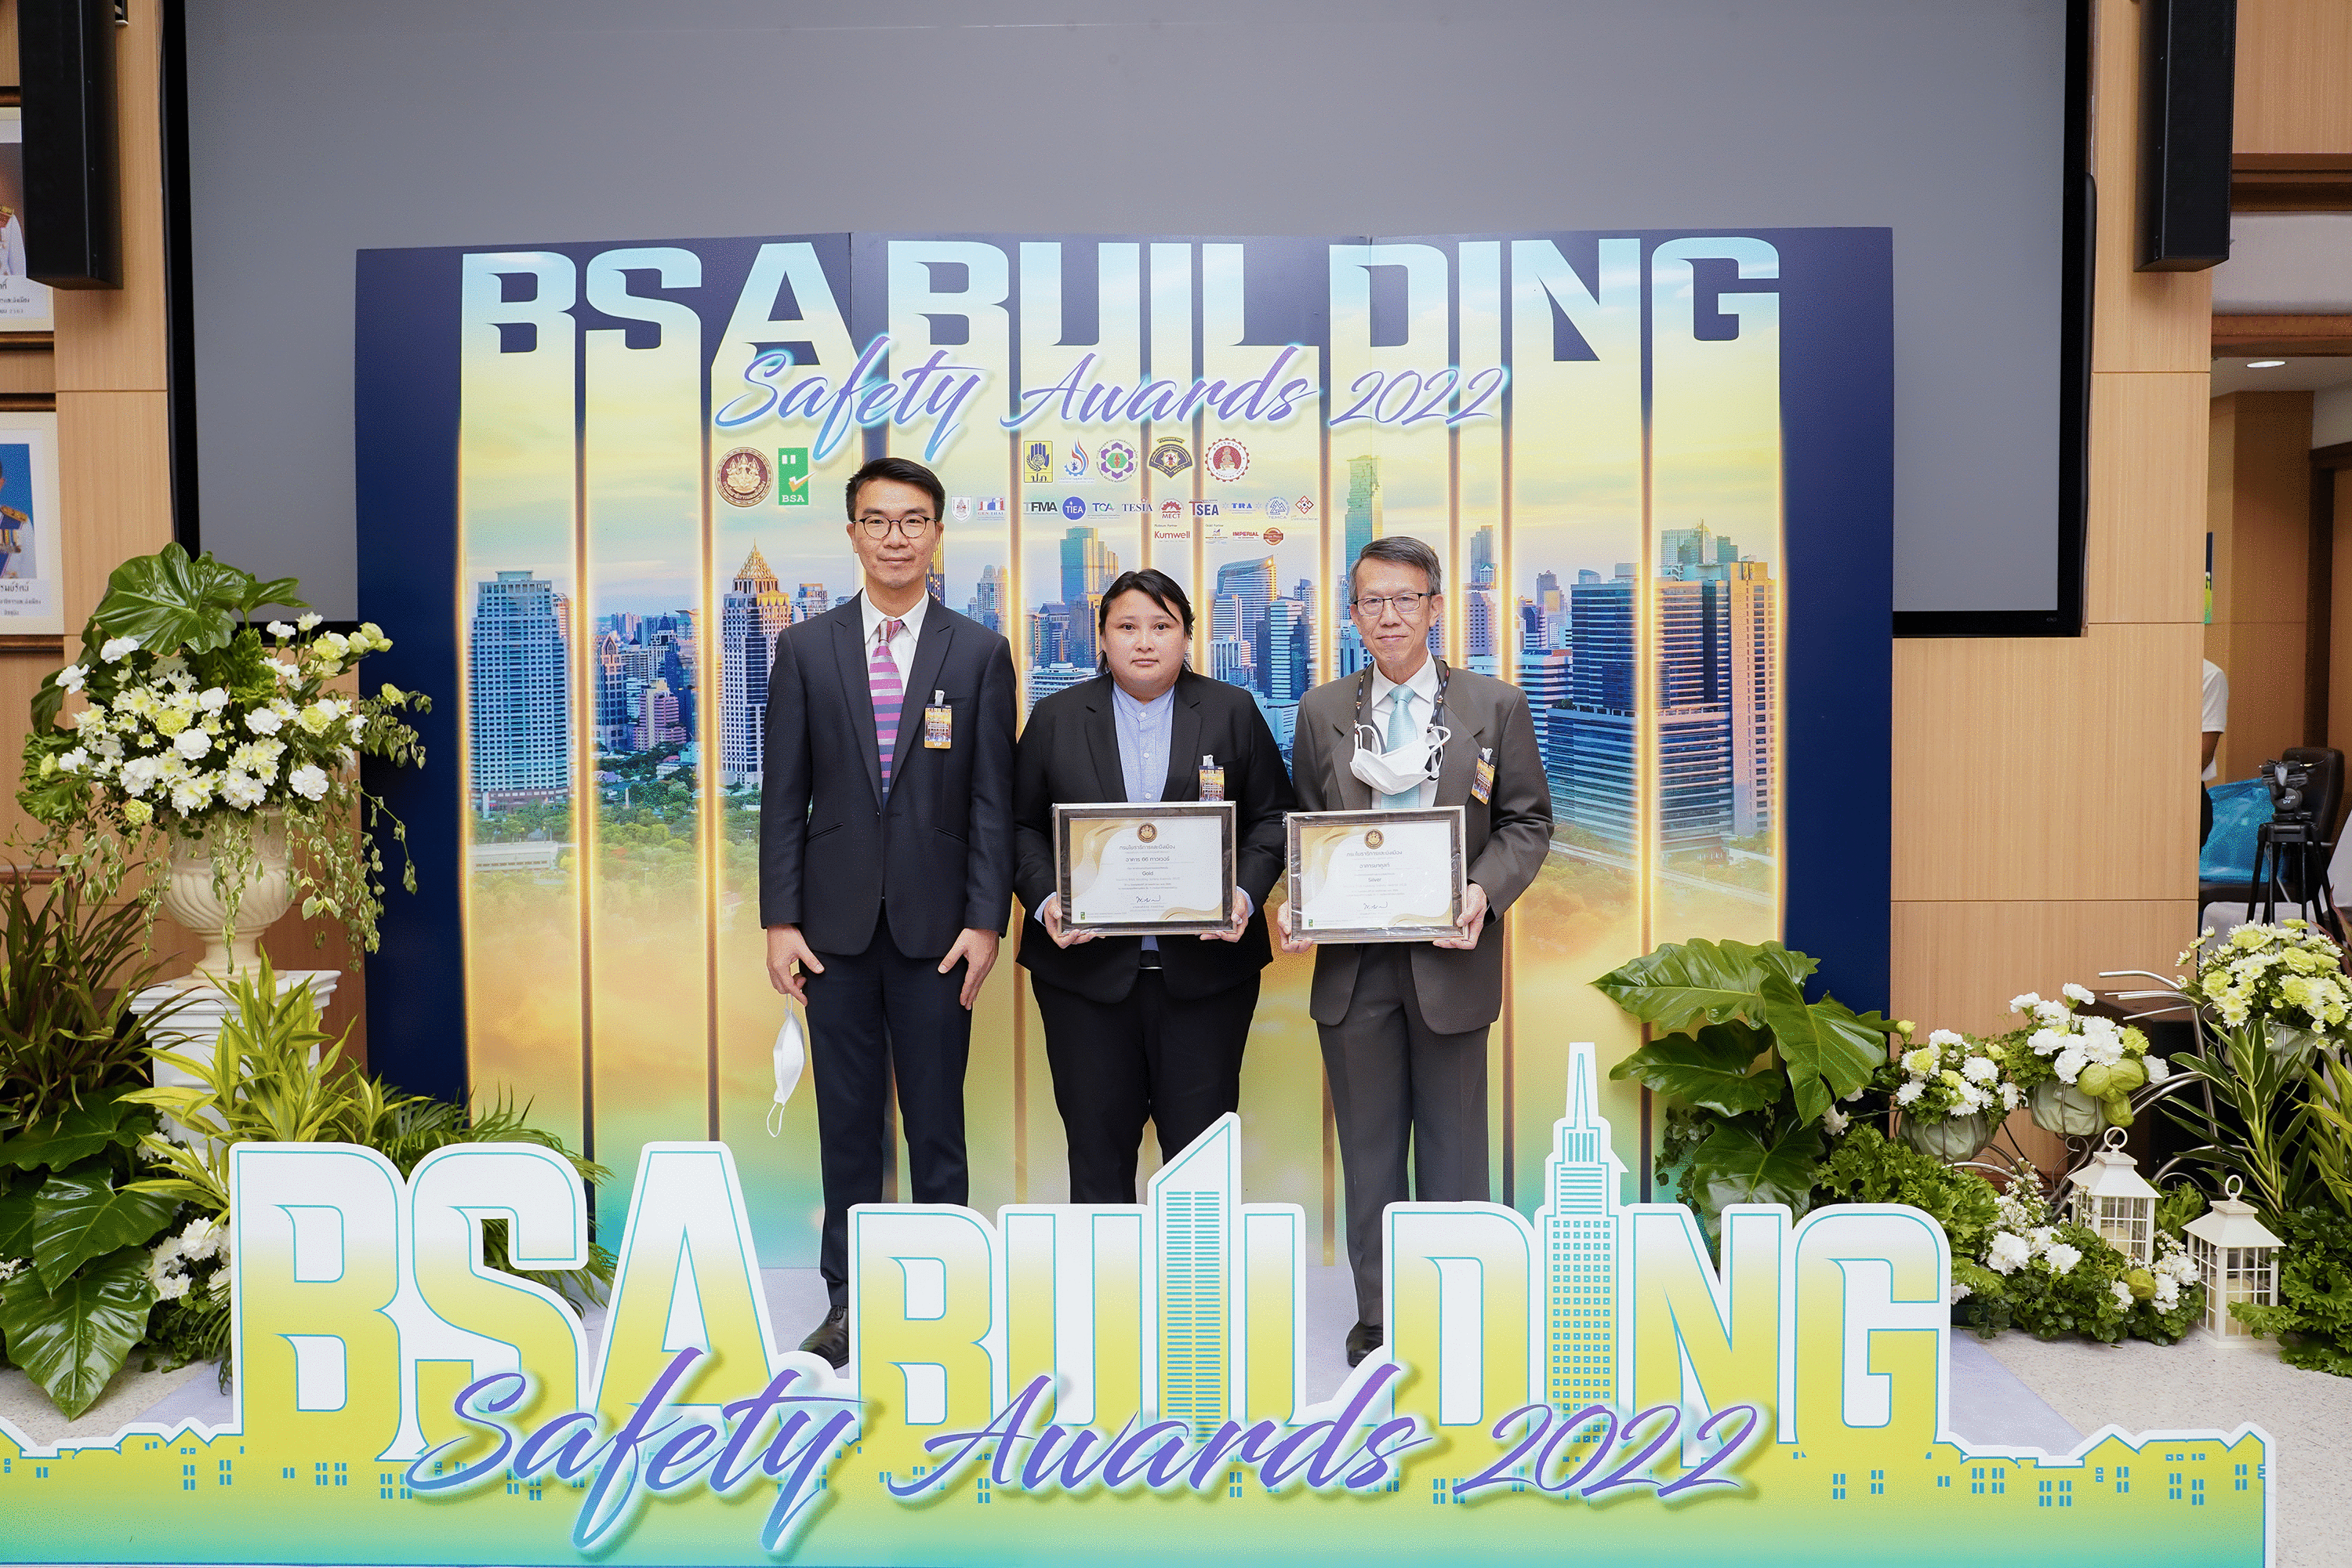 Building Safety Award 2022